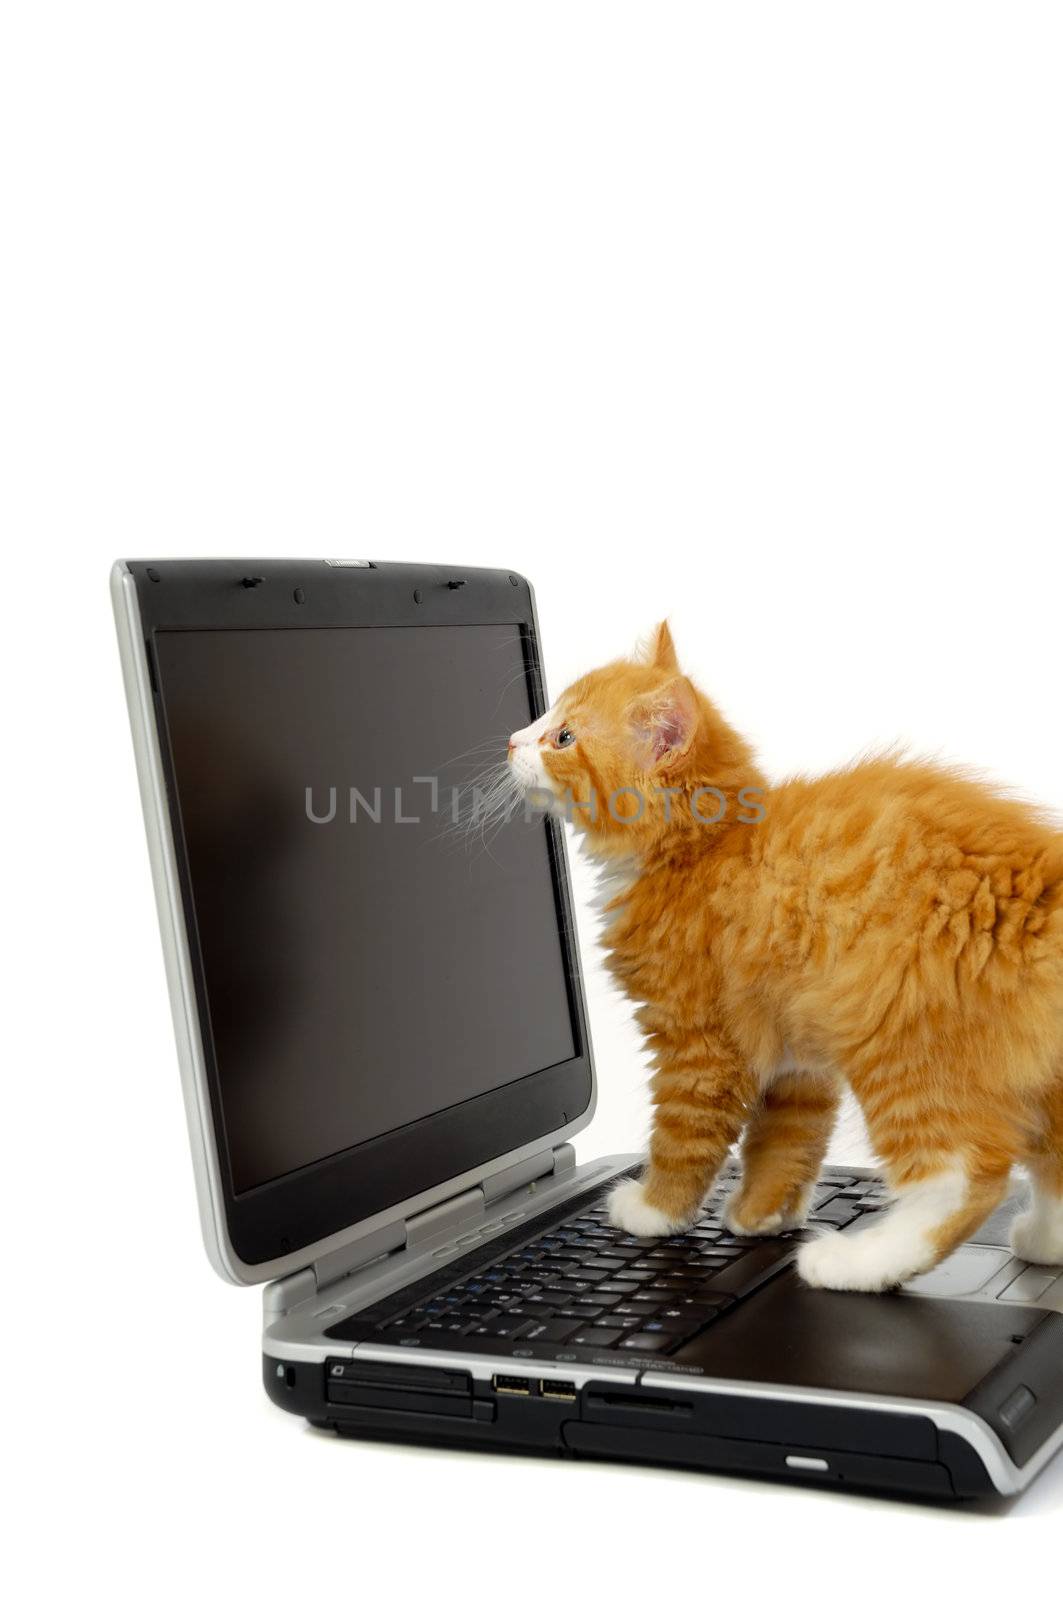 Kitten and laptop by cfoto